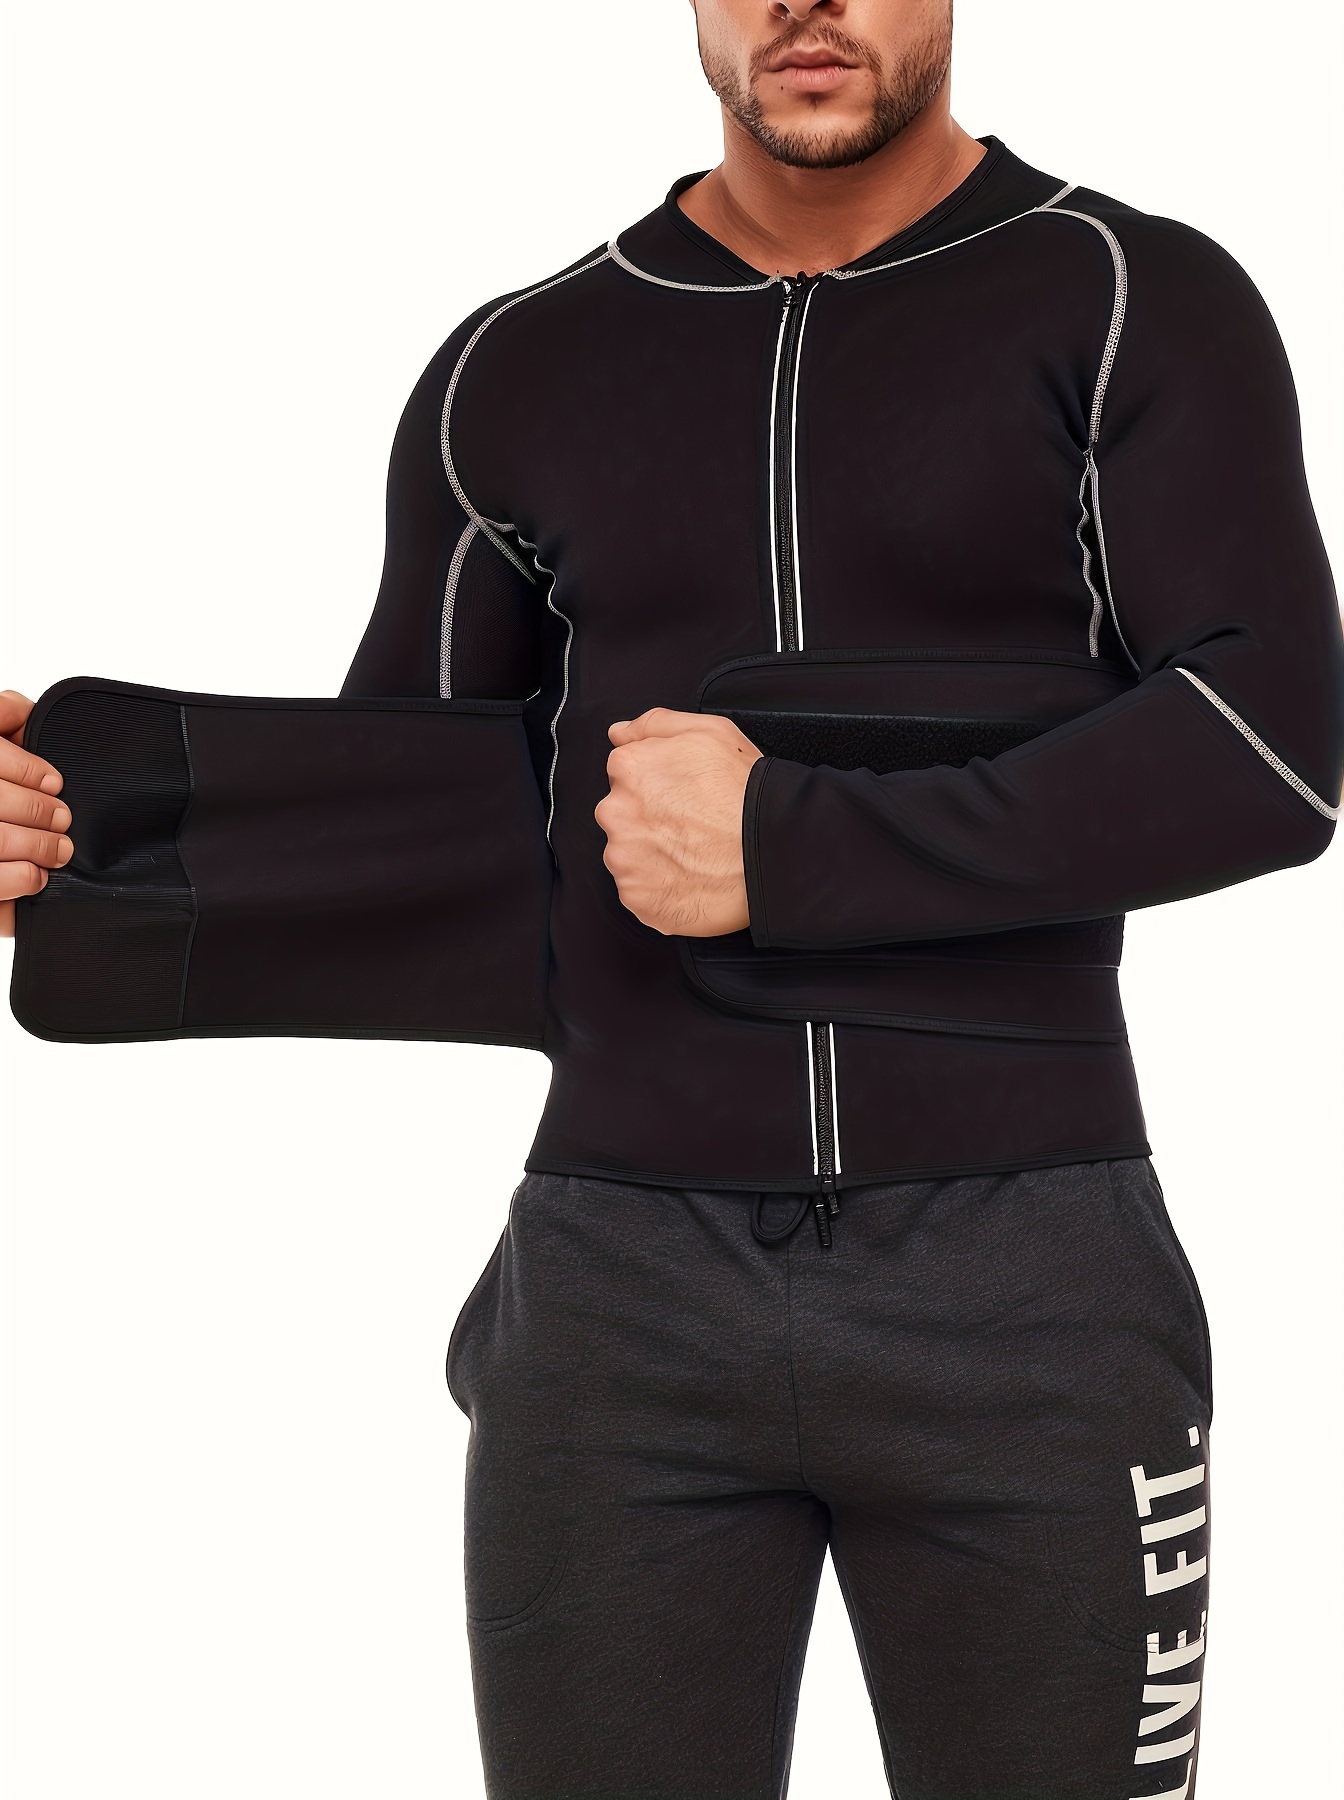 Men Sauna Sweat Suit Waist Trainer Workout Body Shaper Men's Hot